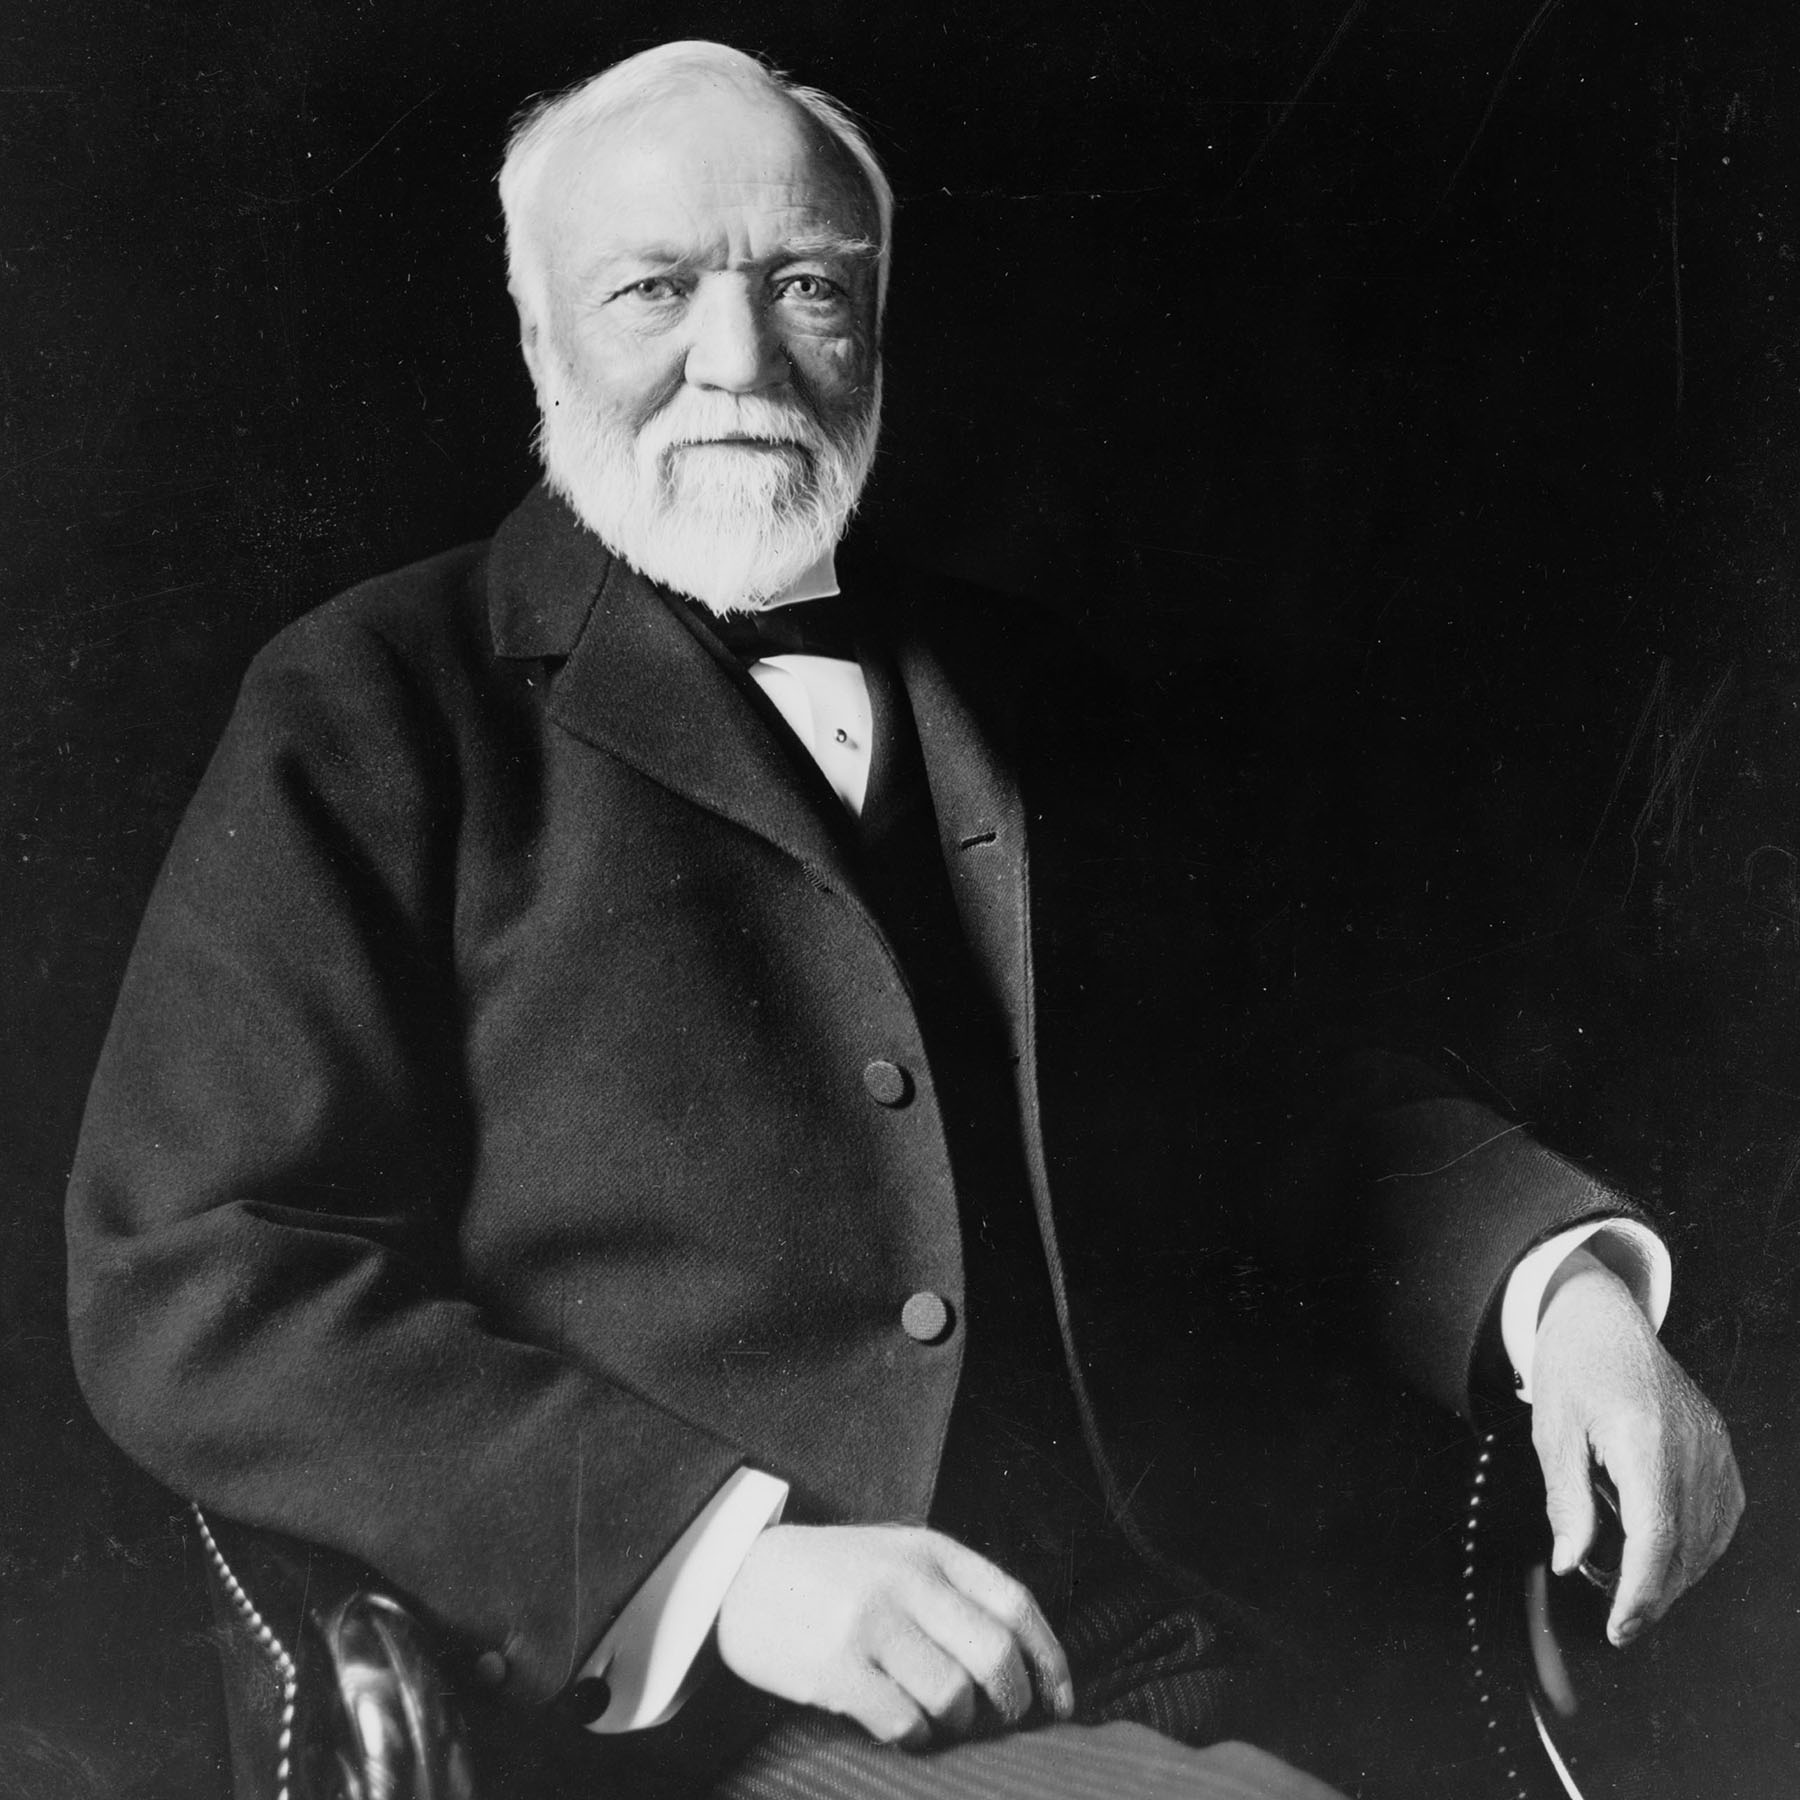 Andrew Carnegie photo wikipedia